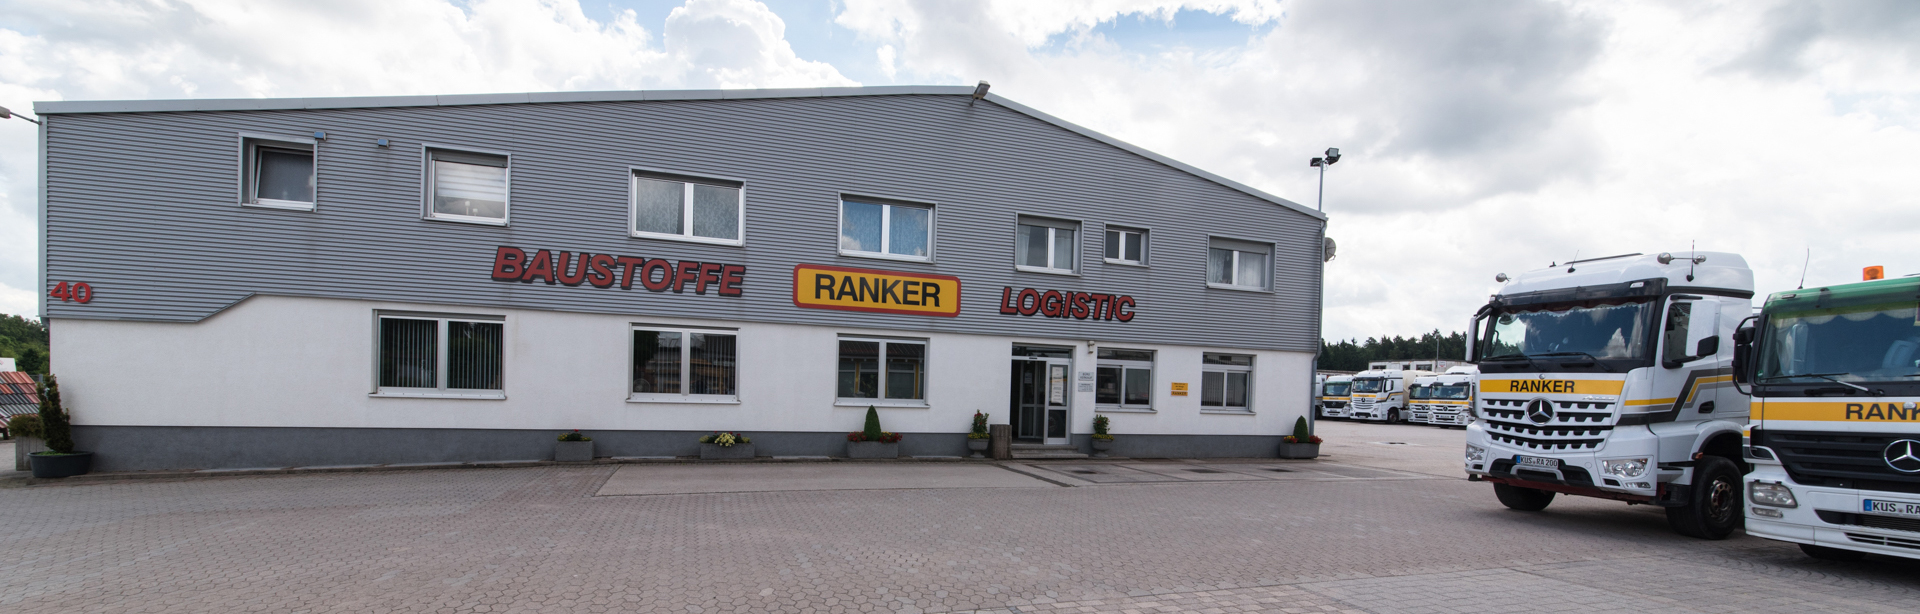 Ranker-GmbH-3.jpg